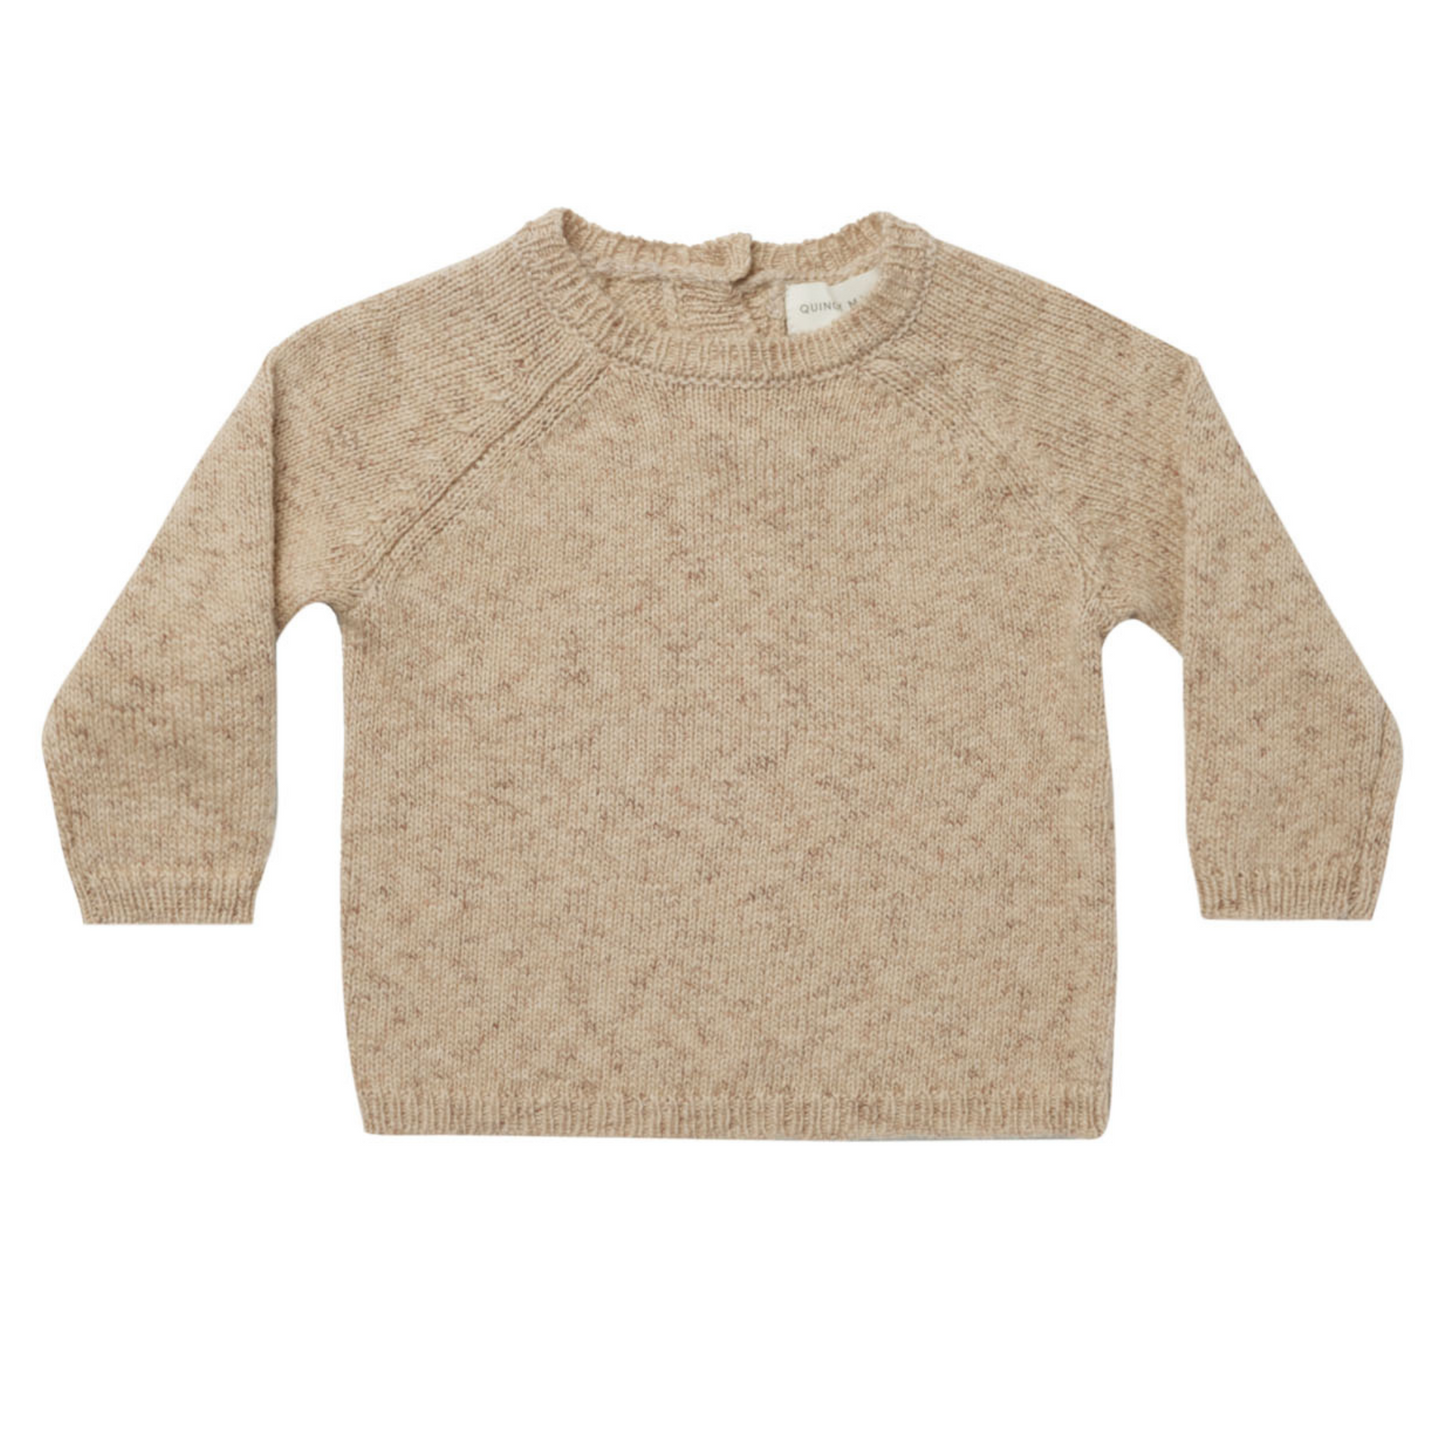 Speckled Knit Sweater, Latte